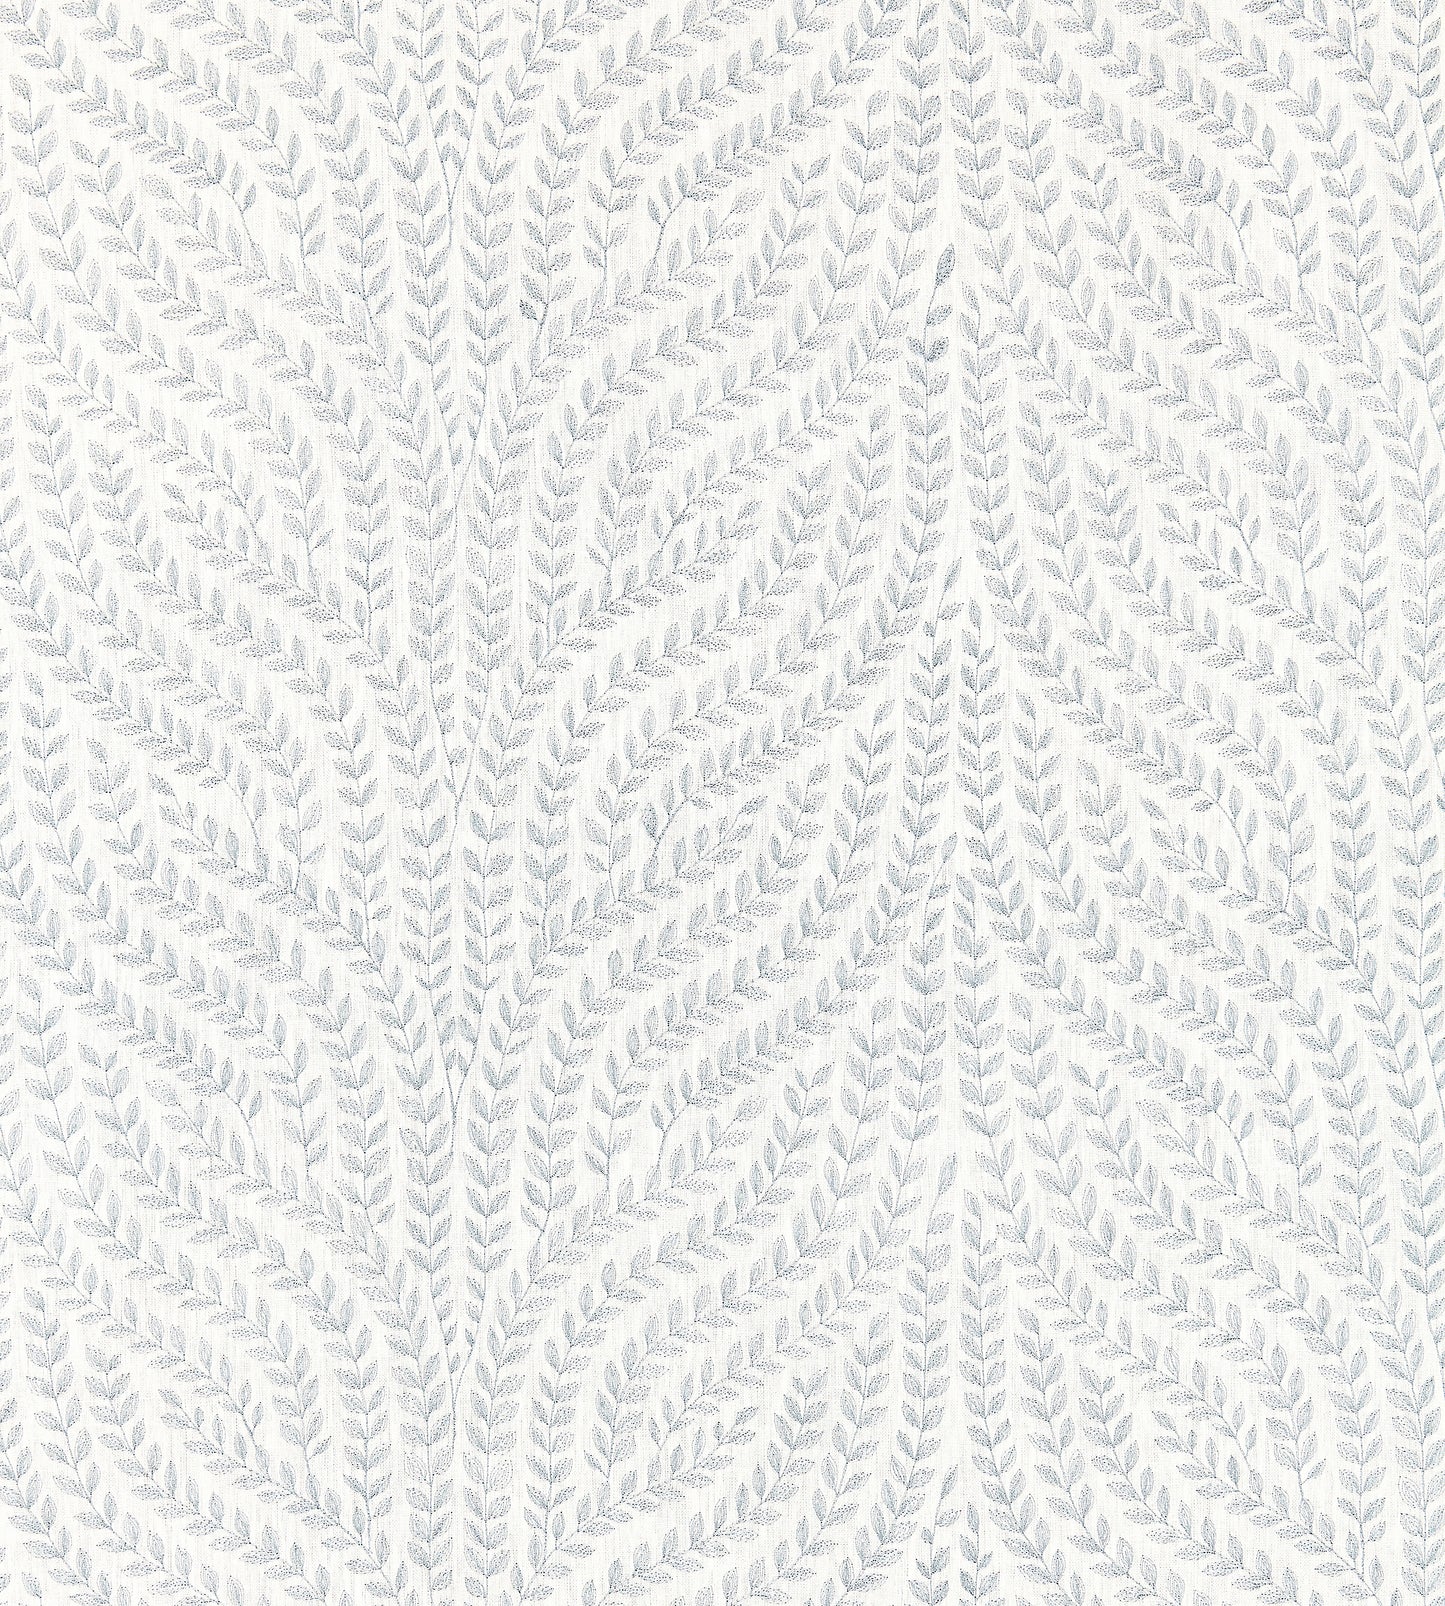 Purchase Scalamandre Fabric Pattern# SC 000127125, Willow Vine Embroidery Aquamarine 1